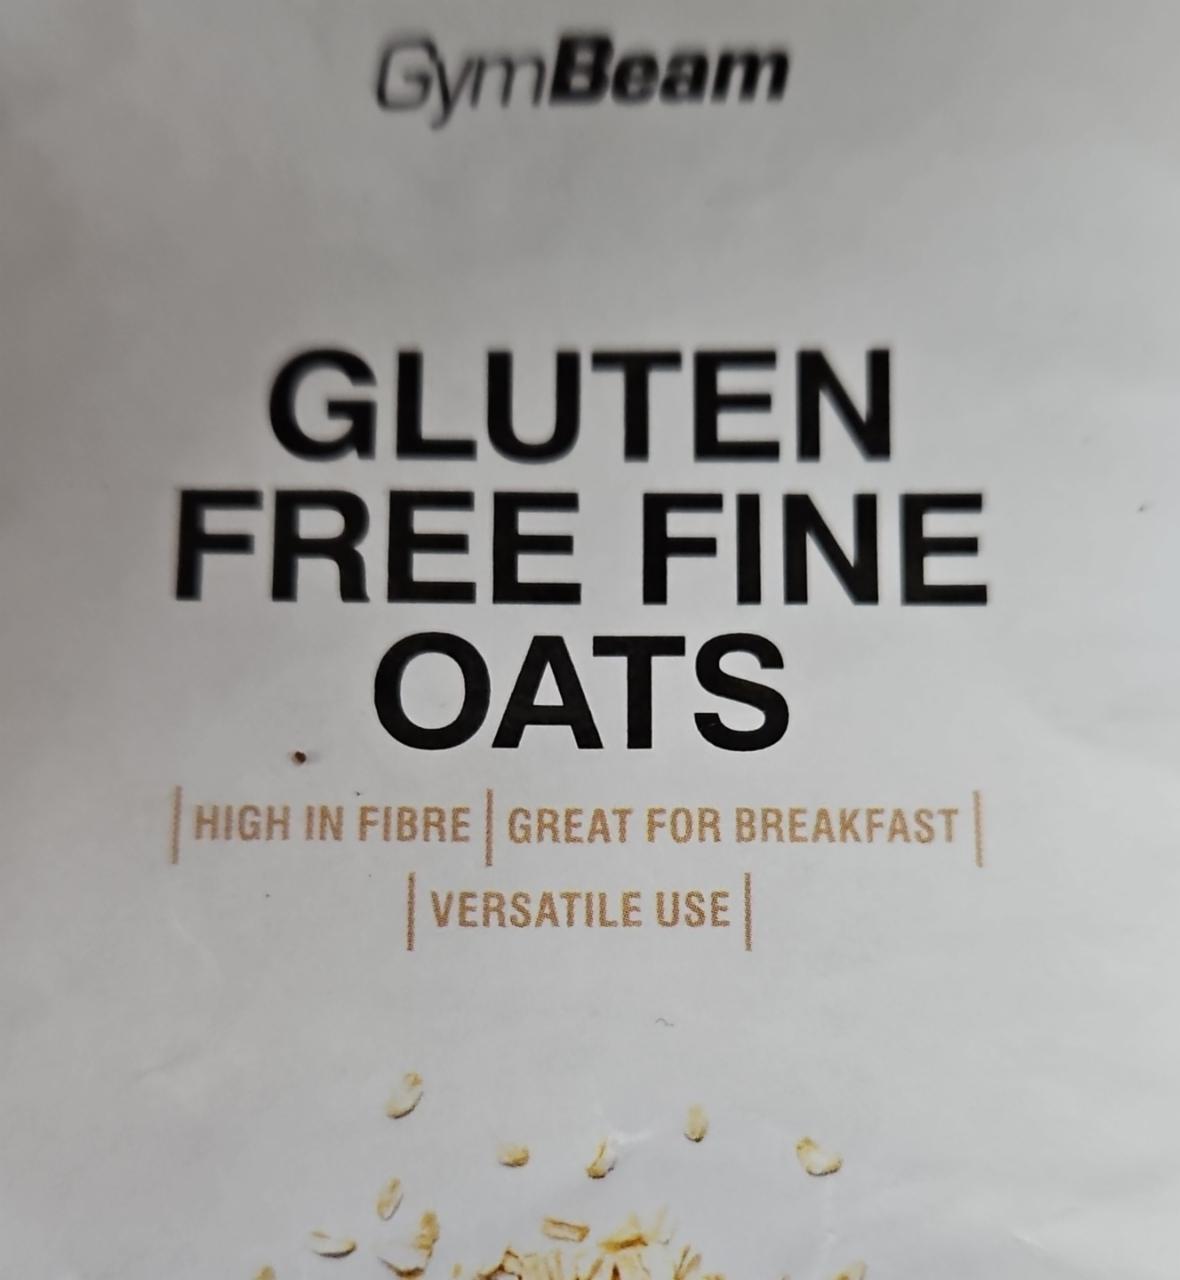 Képek - Gluten free fine oats GymBeam